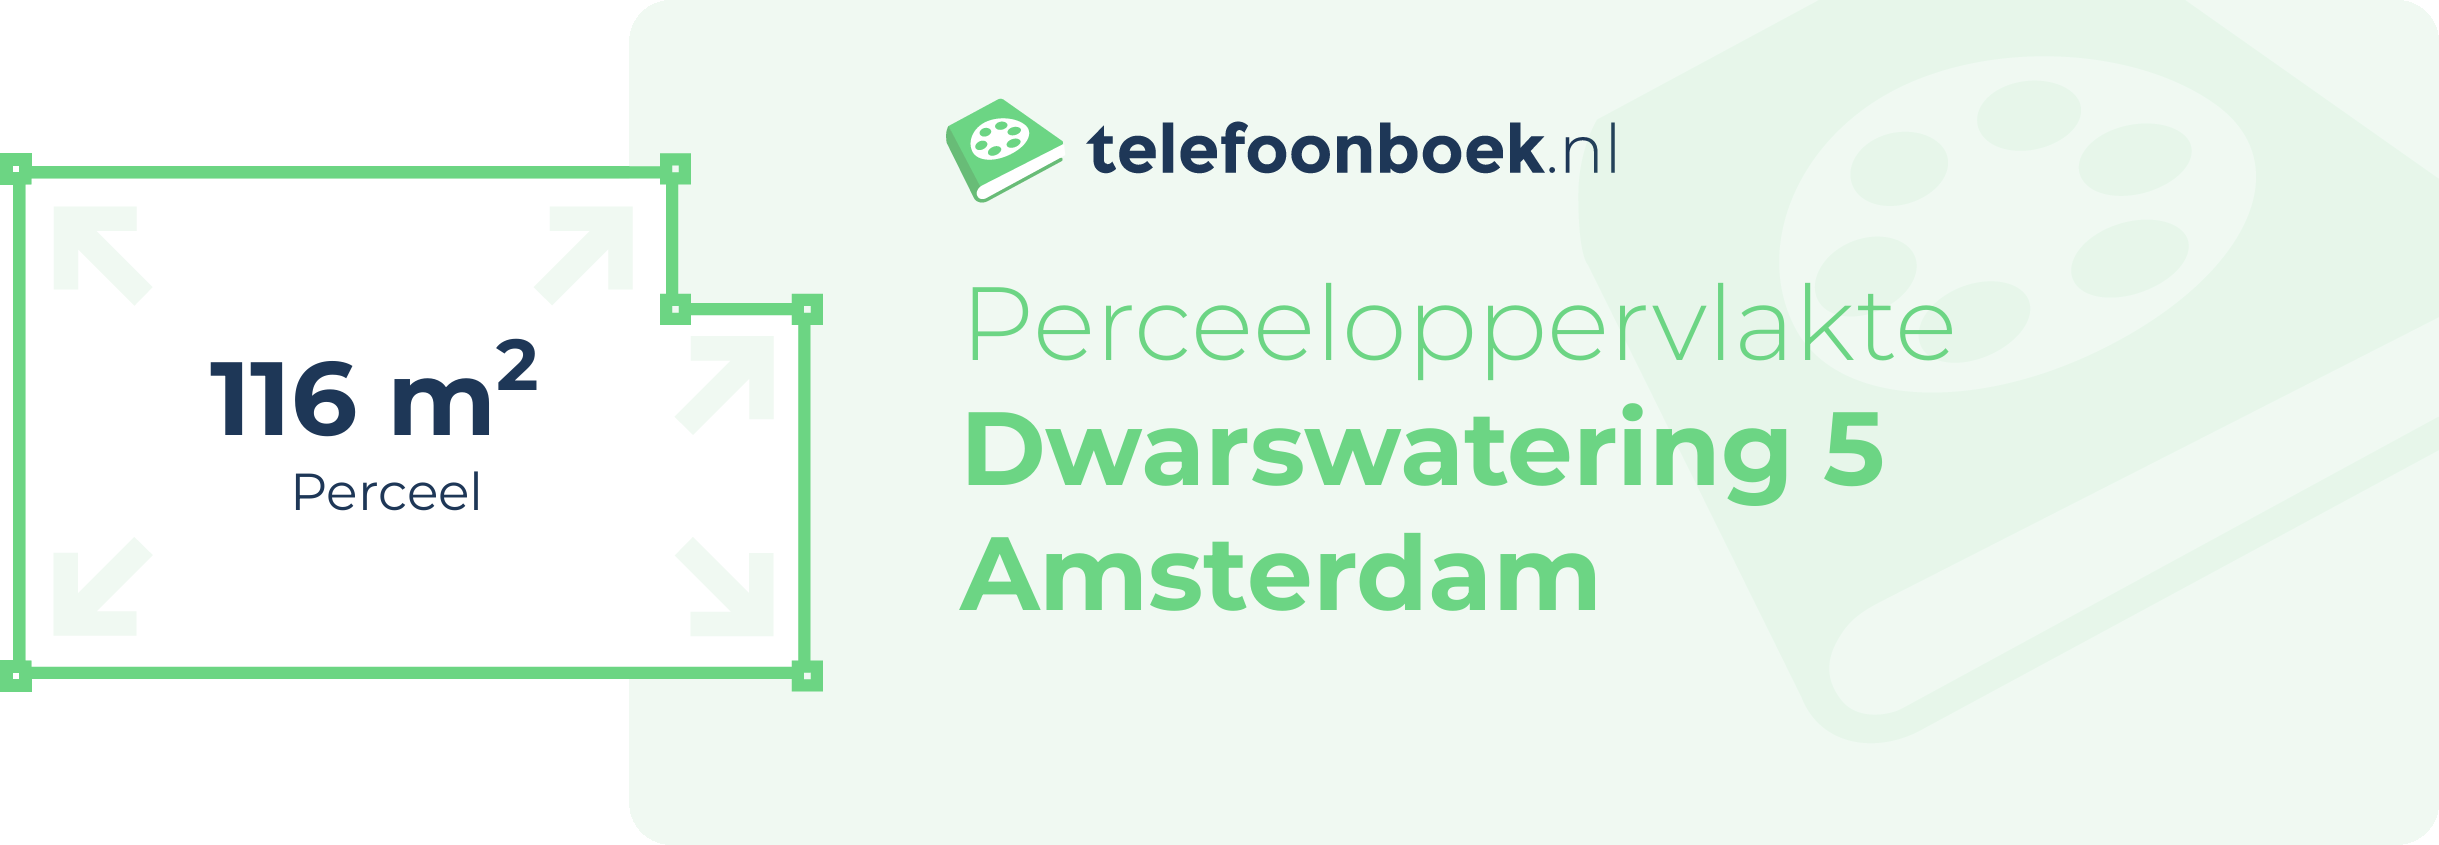 Perceeloppervlakte Dwarswatering 5 Amsterdam